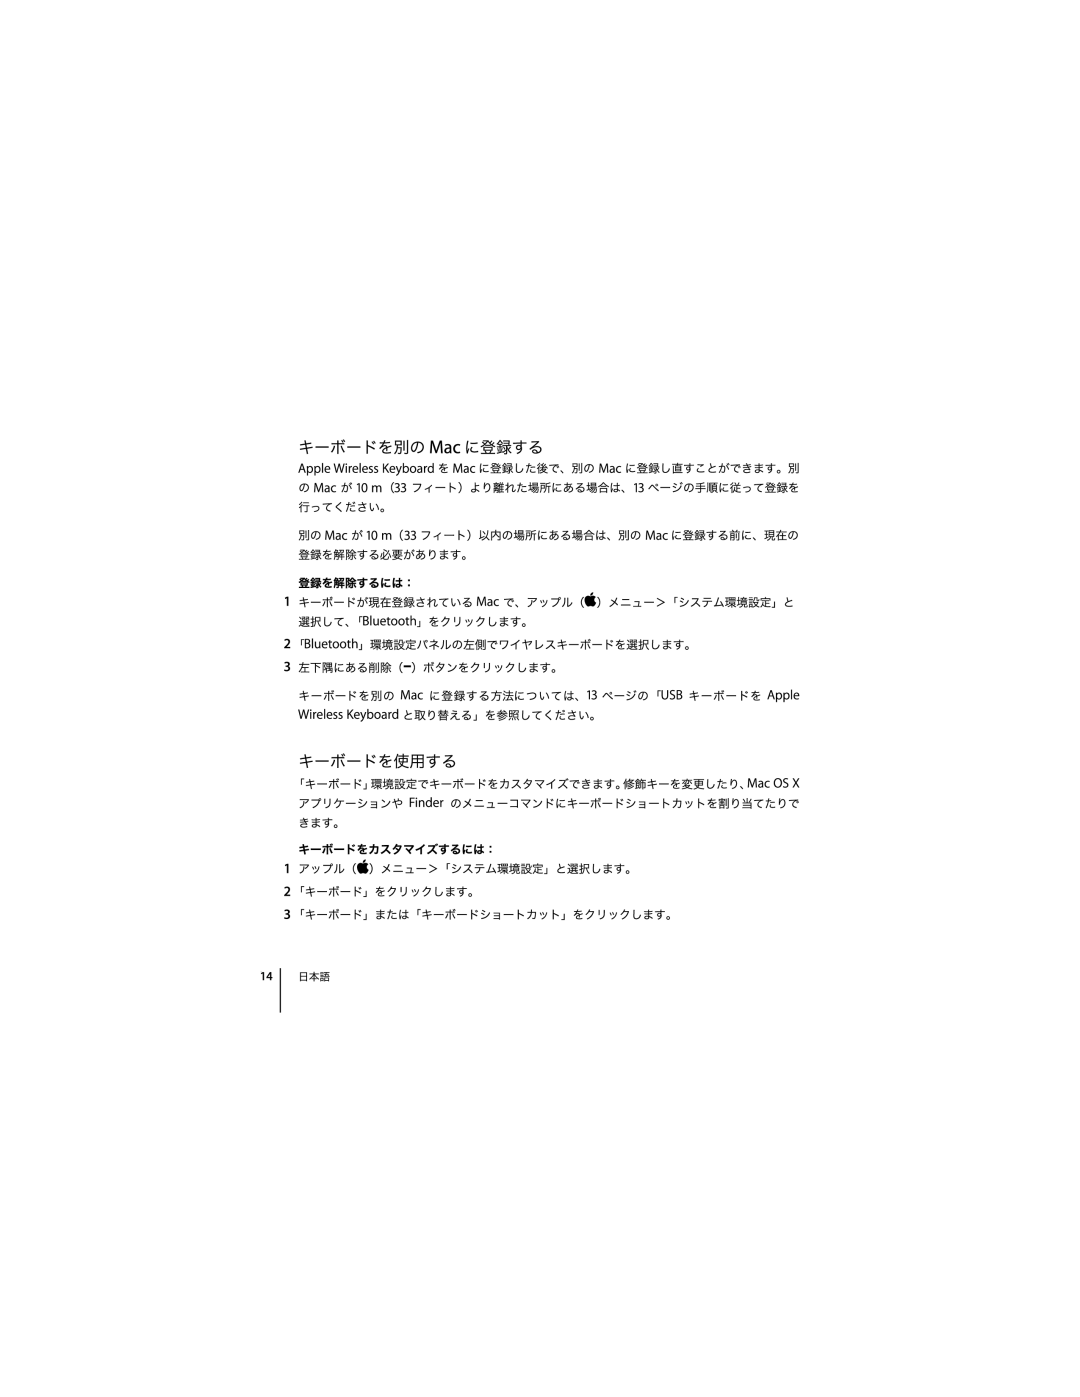 Apple MC184LL/B, 1Z034-4954-A manual Japanese 